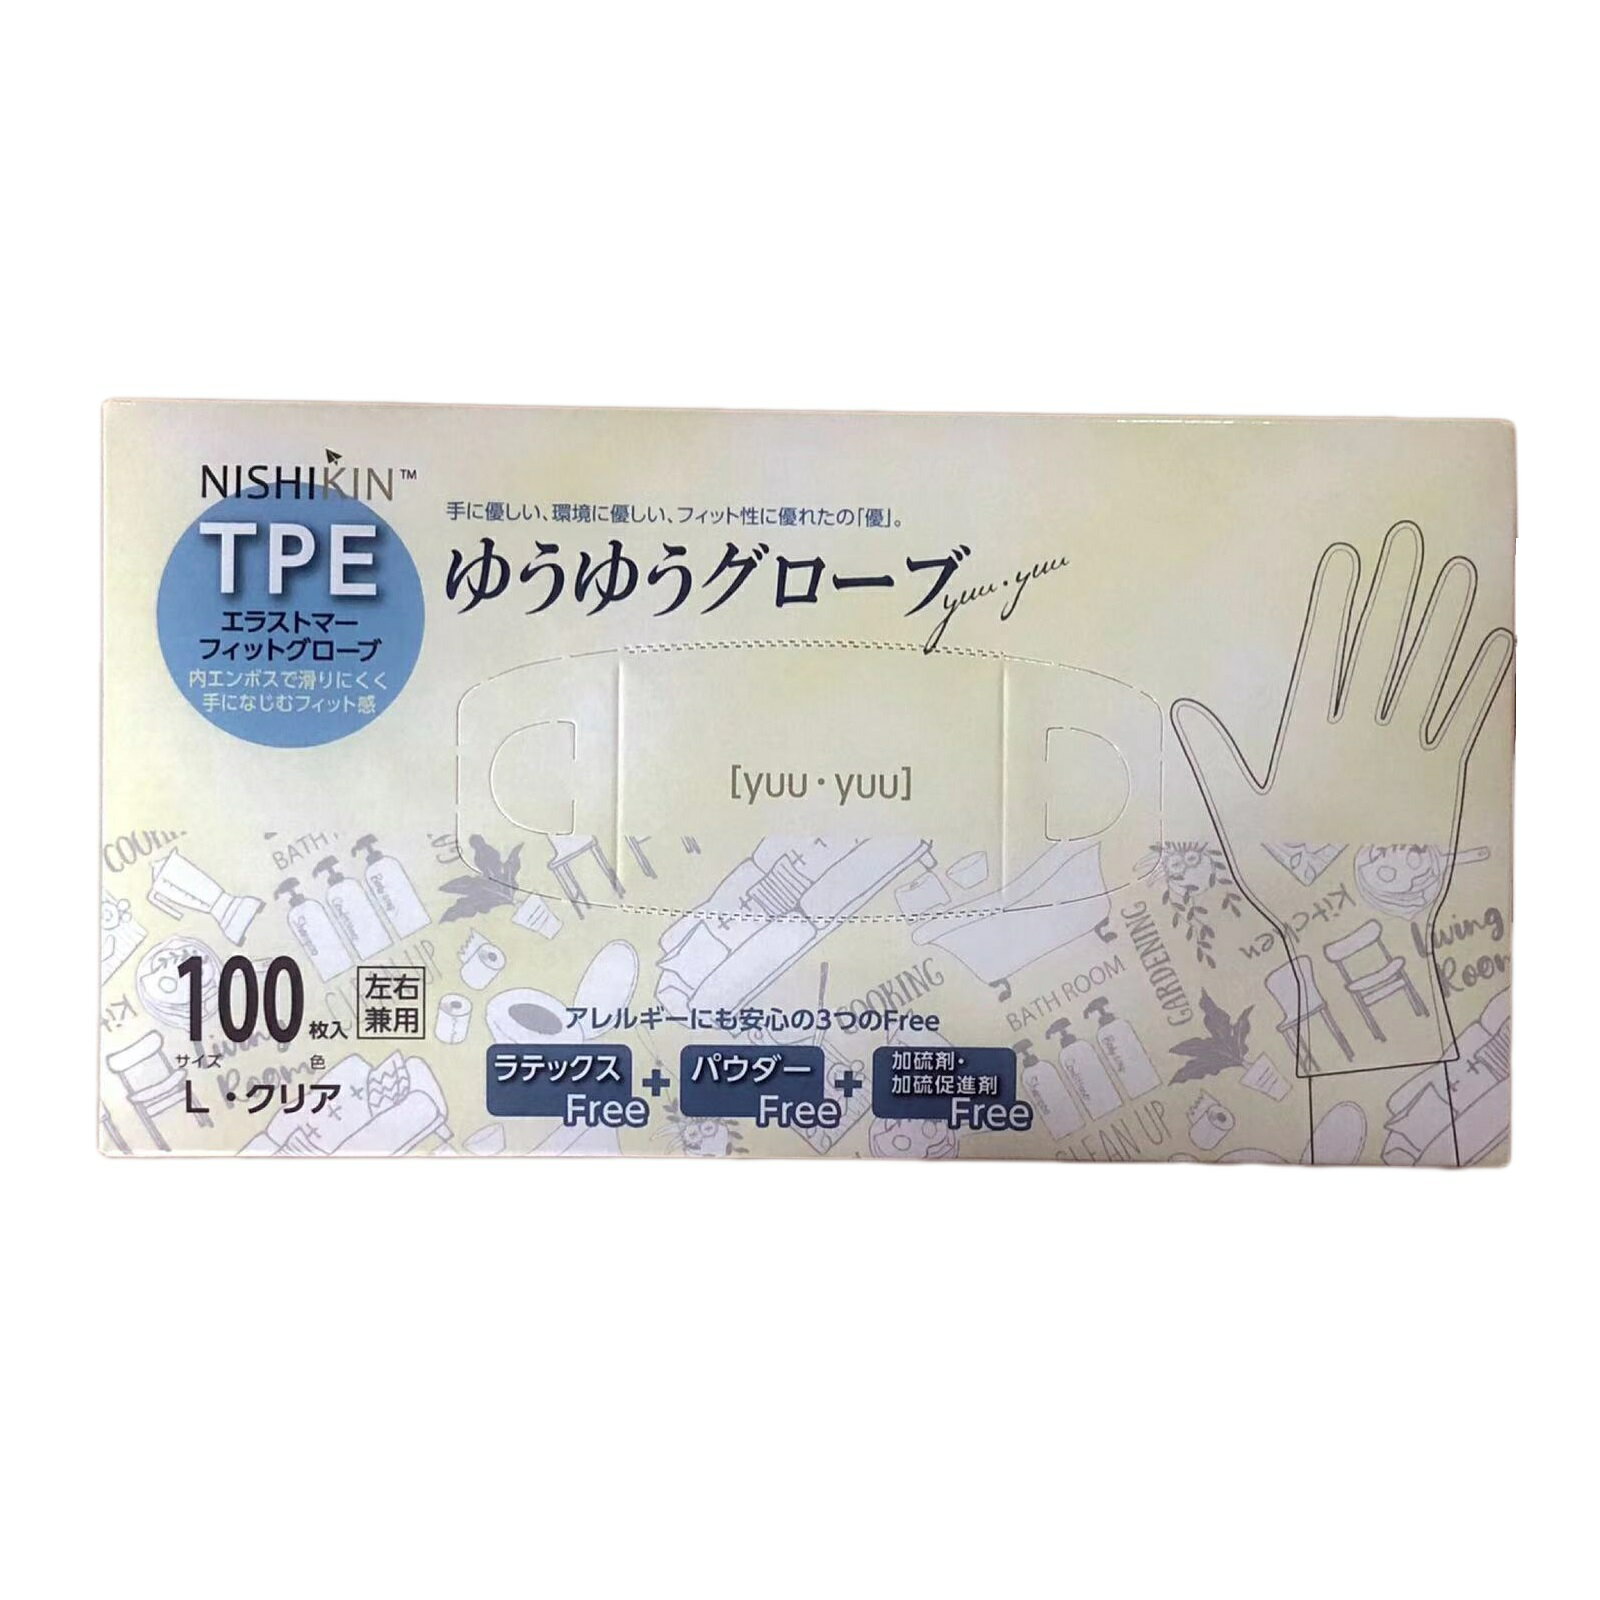 TPE手袋 100枚入 Sサイズ 透明 使い捨て 使いきり 手袋 TPE グローブ クリア 食品衛生規格合格品 素手感覚 家庭 業務用 ウイルス対策 清潔